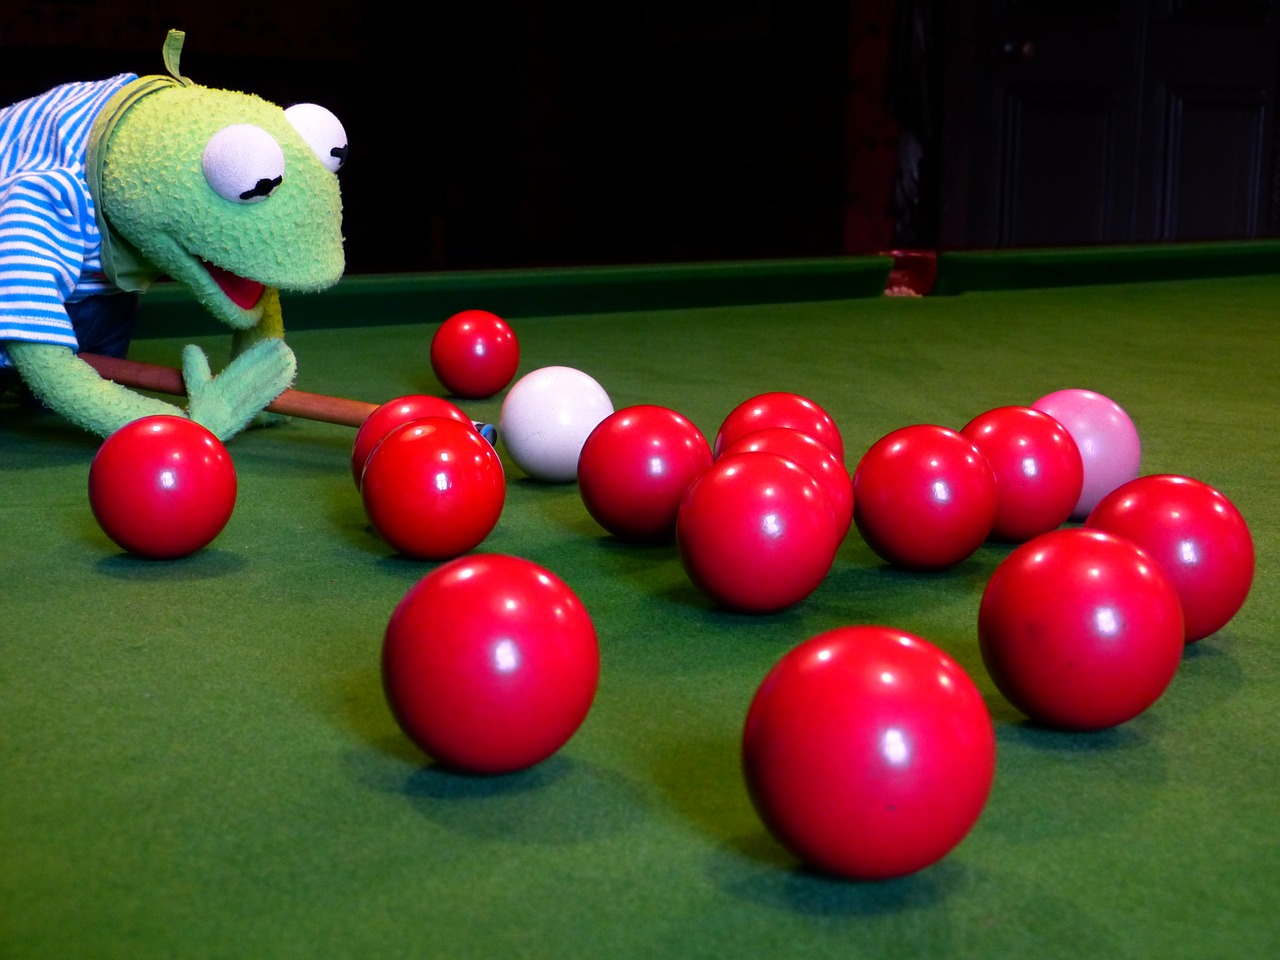 kermit frog billiards free photo